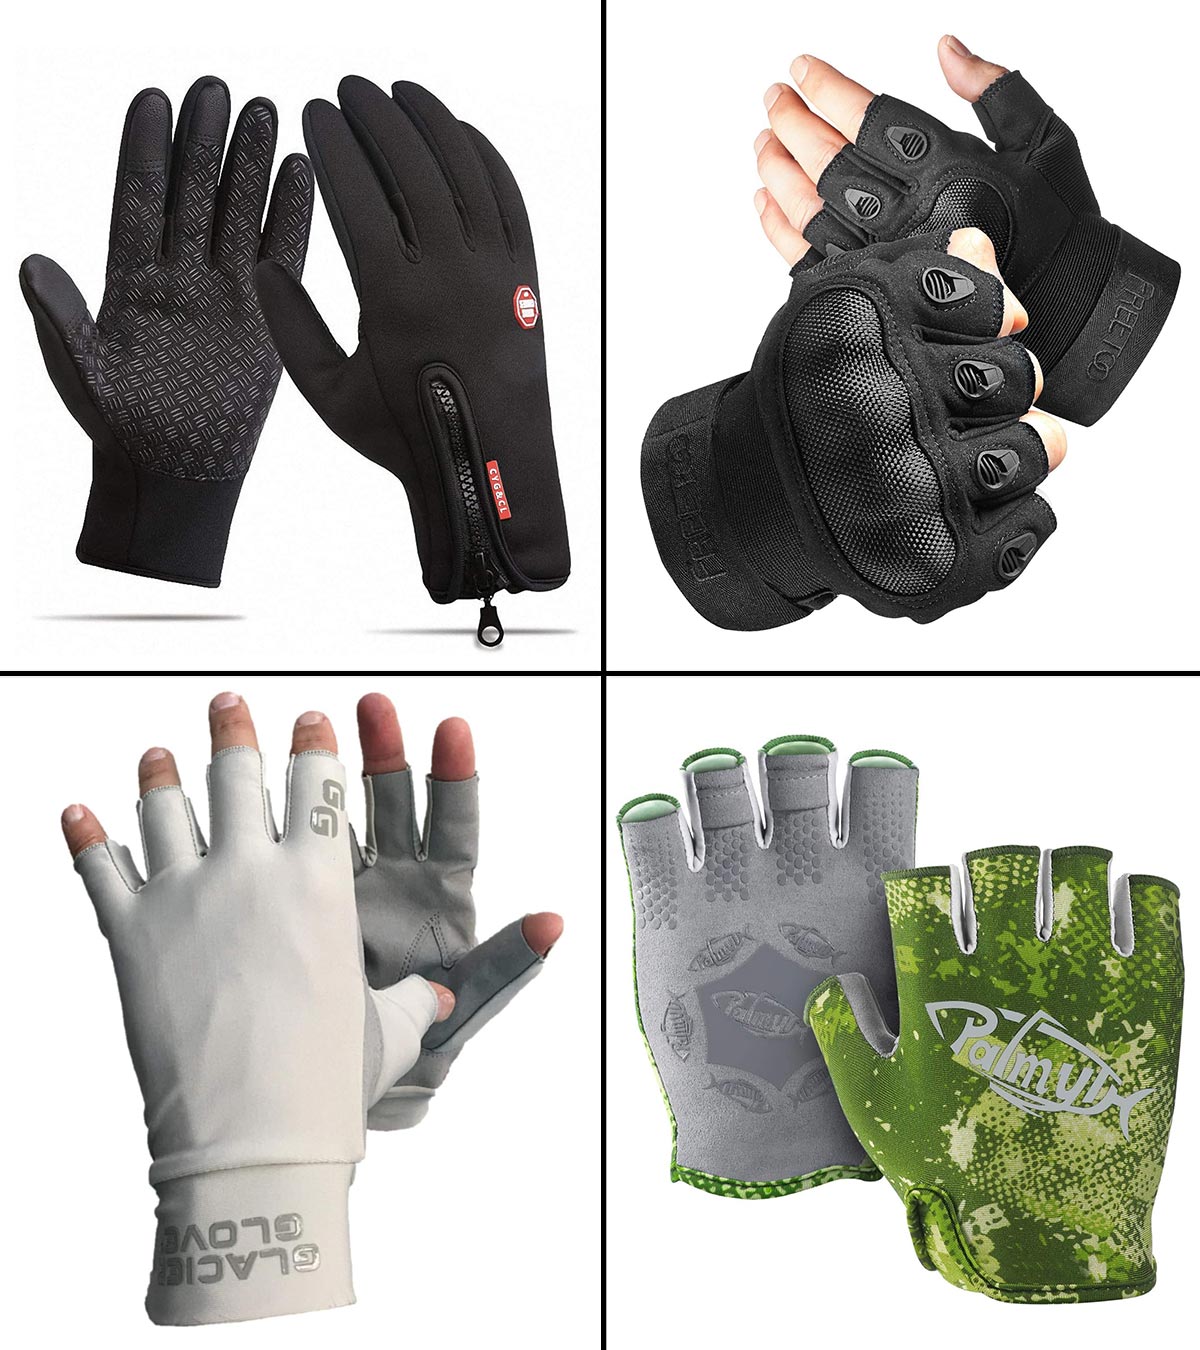 https://www.momjunction.com/wp-content/uploads/2020/07/13-Best-Hiking-Gloves-Of-2020-Banner.jpg